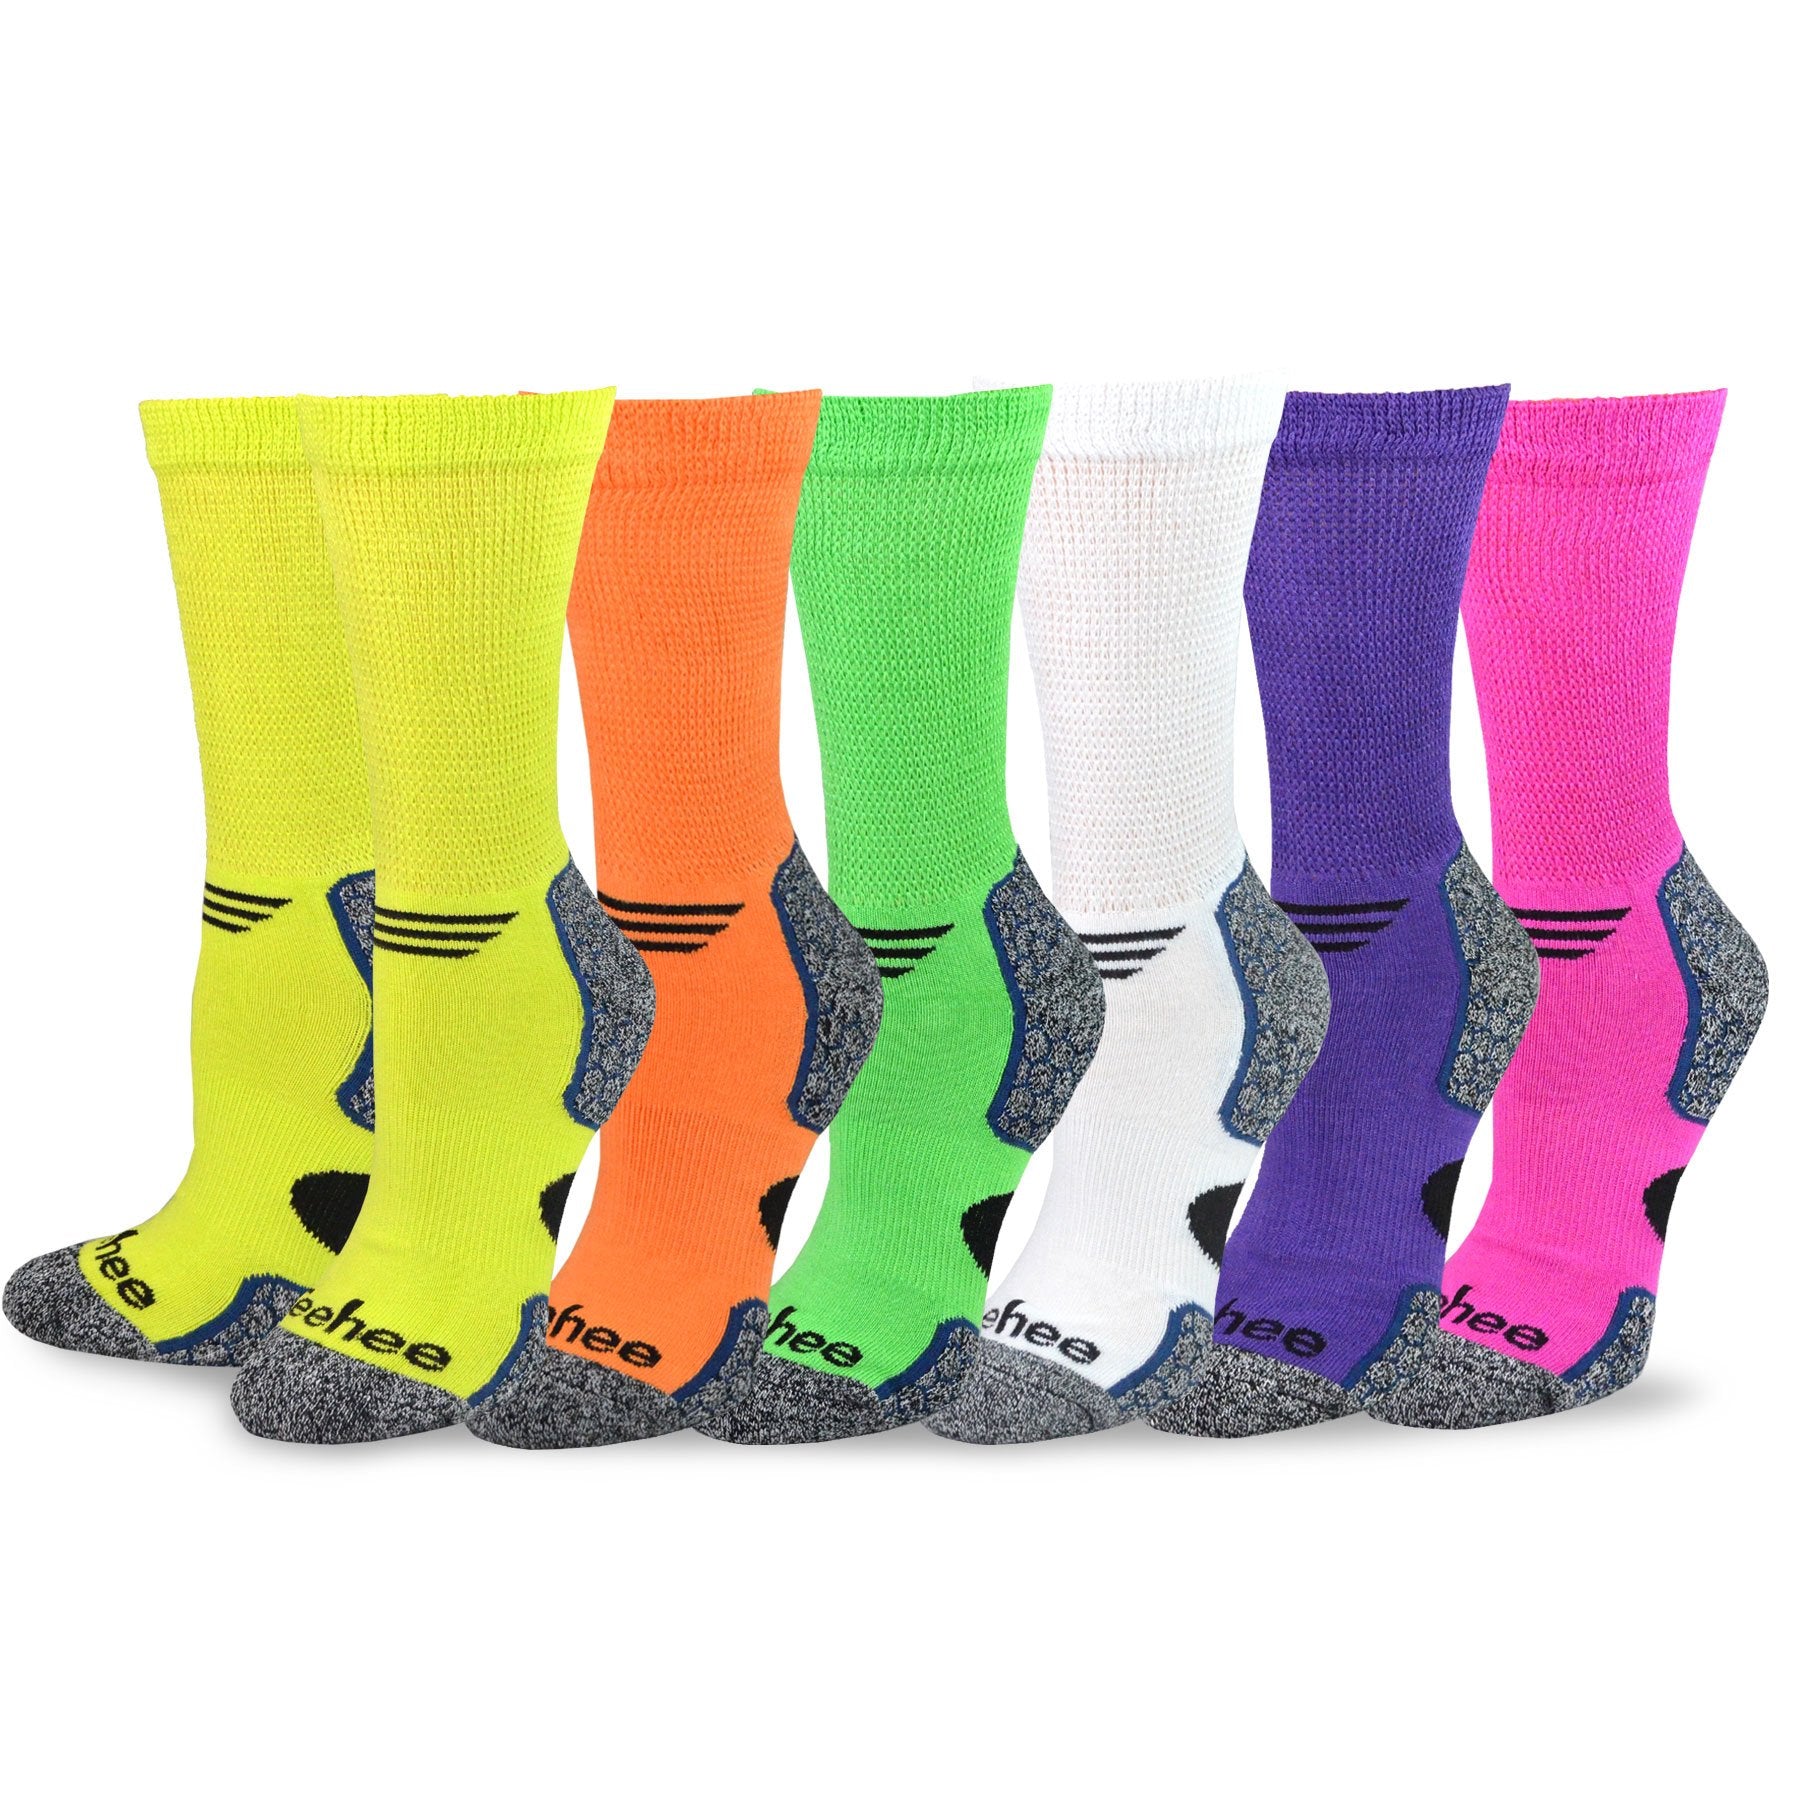 Ashley Bamboo Trainer Socks, Grey, size 7-11 - The Ethical Shop